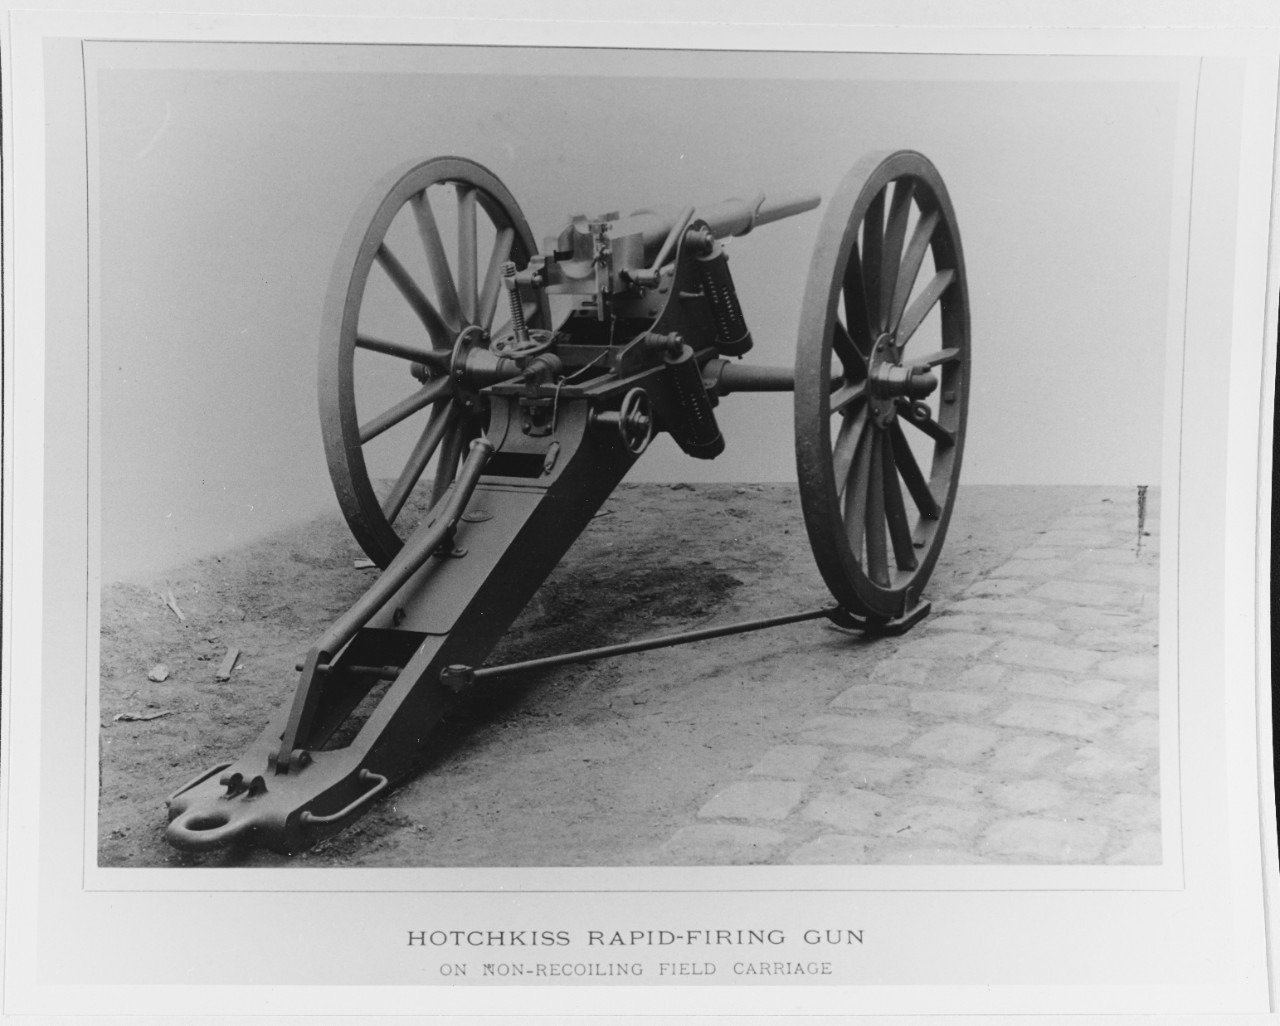 Hotchkiss 37mm/40 (1-PDR) rapid-firing gun, on the Hotchkiss non-recoiling field carriage.